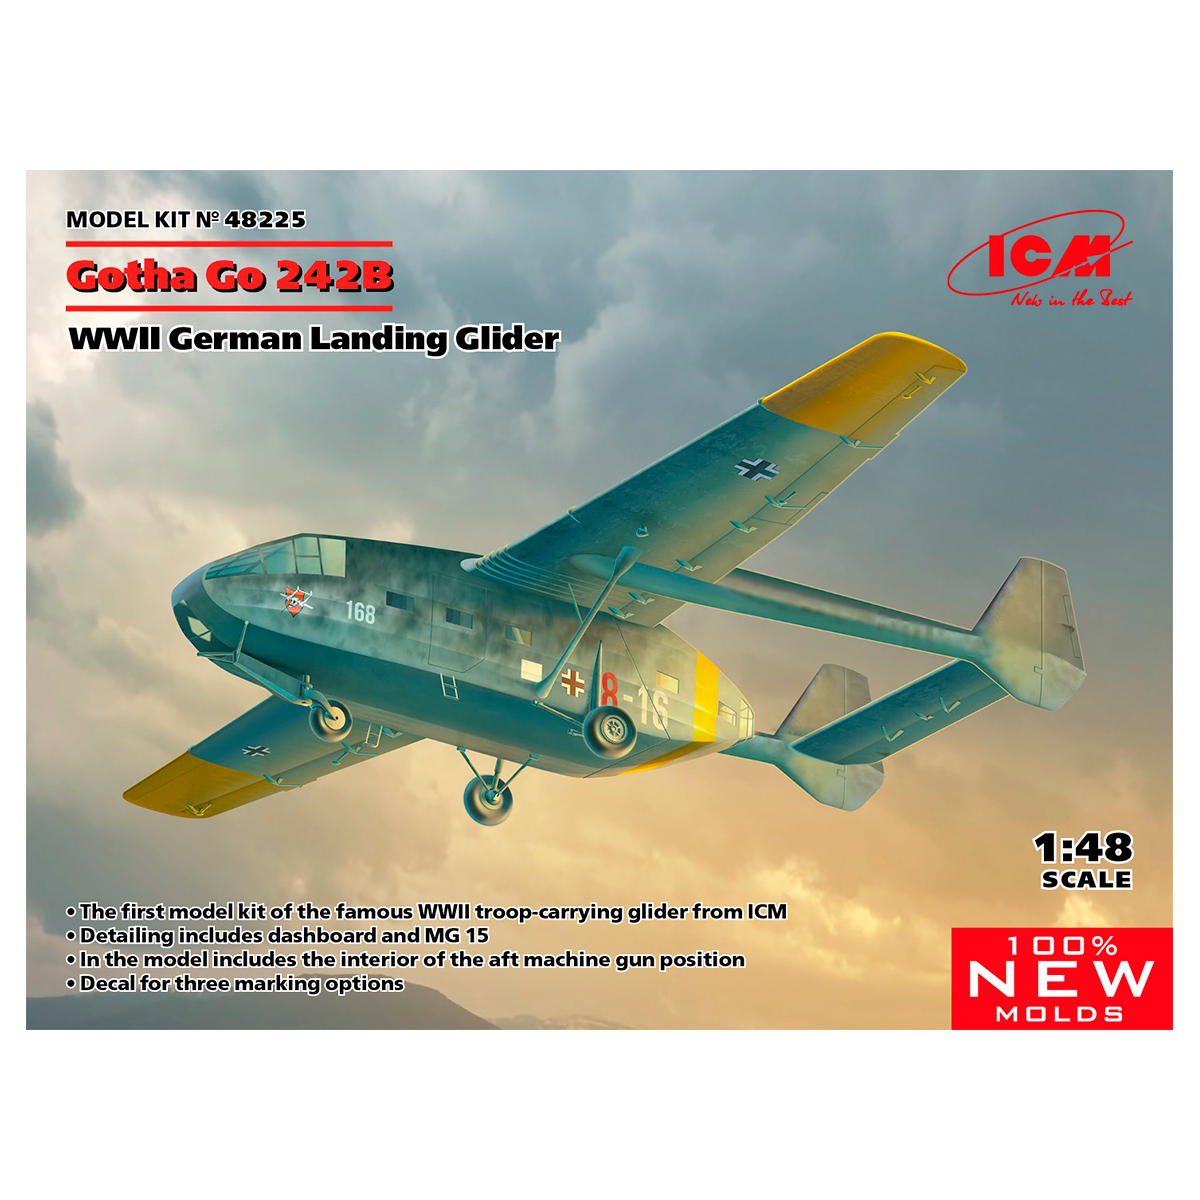 Gotha Go 242B, WWII German Landing Glider (100% new molds) 1/48